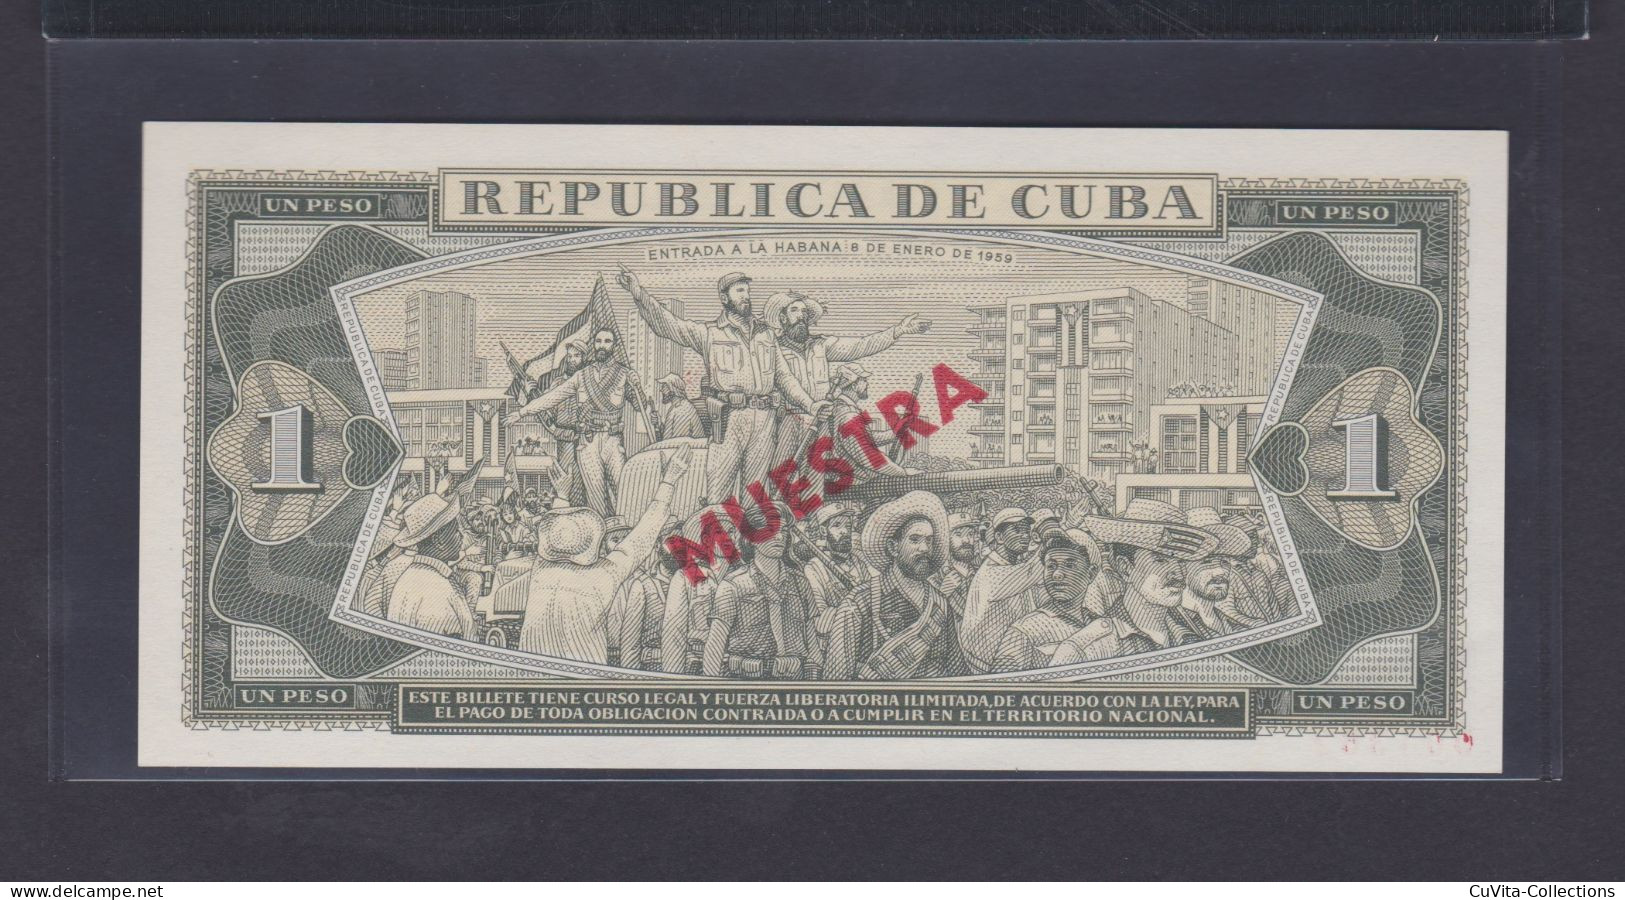 1 PESO 1985 UNC / SC MUESTRA - Cuba